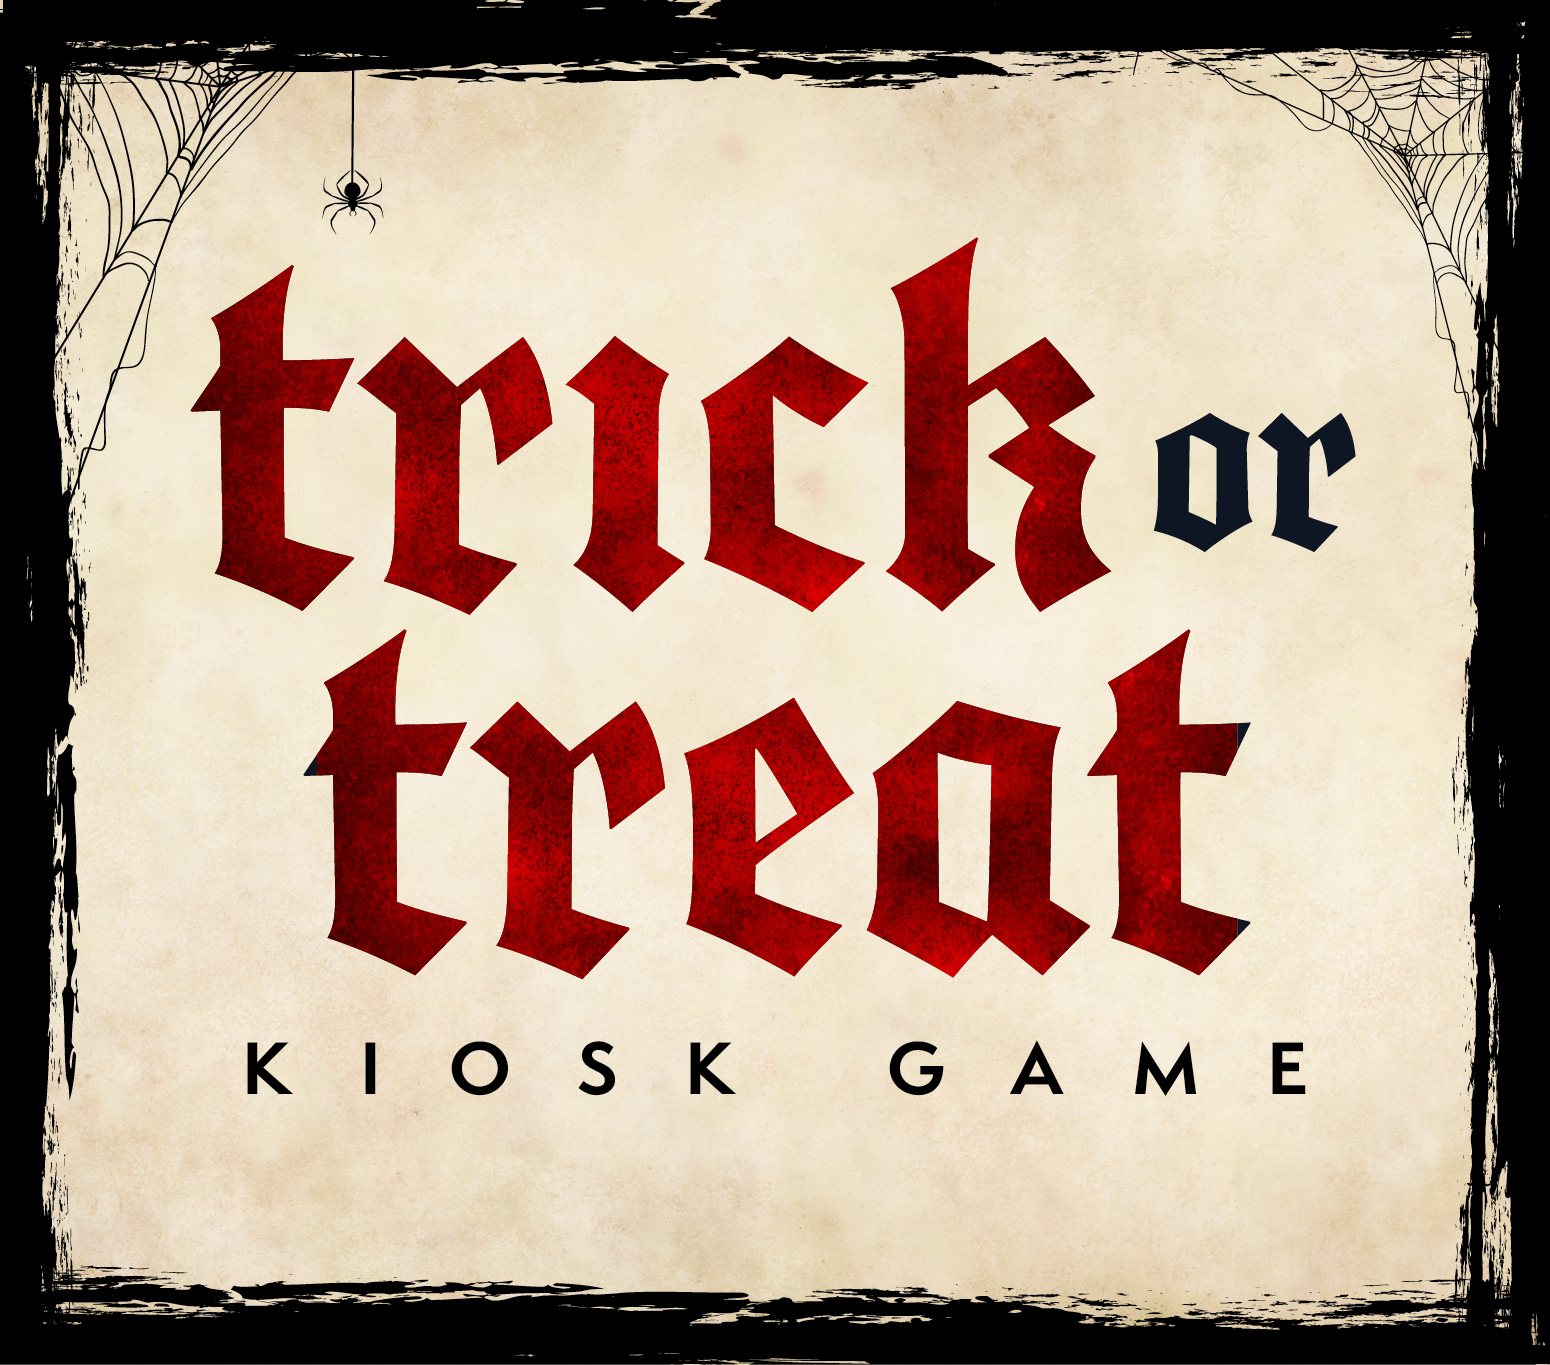 Trick Or Treat Kiosk Game